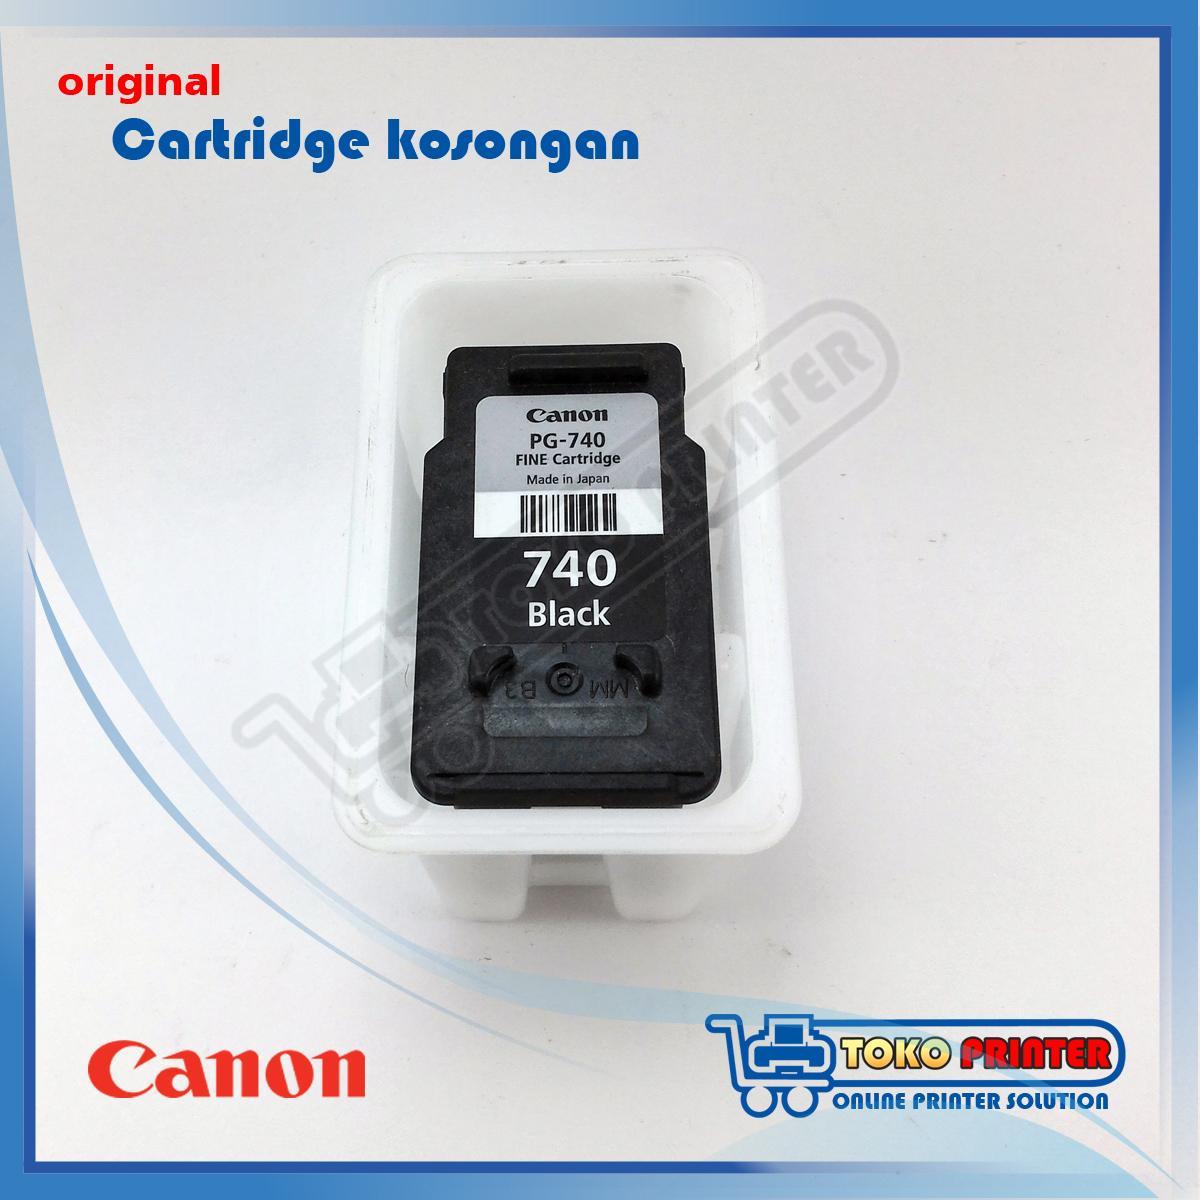 Cartridge Kosongan Canon PG-740